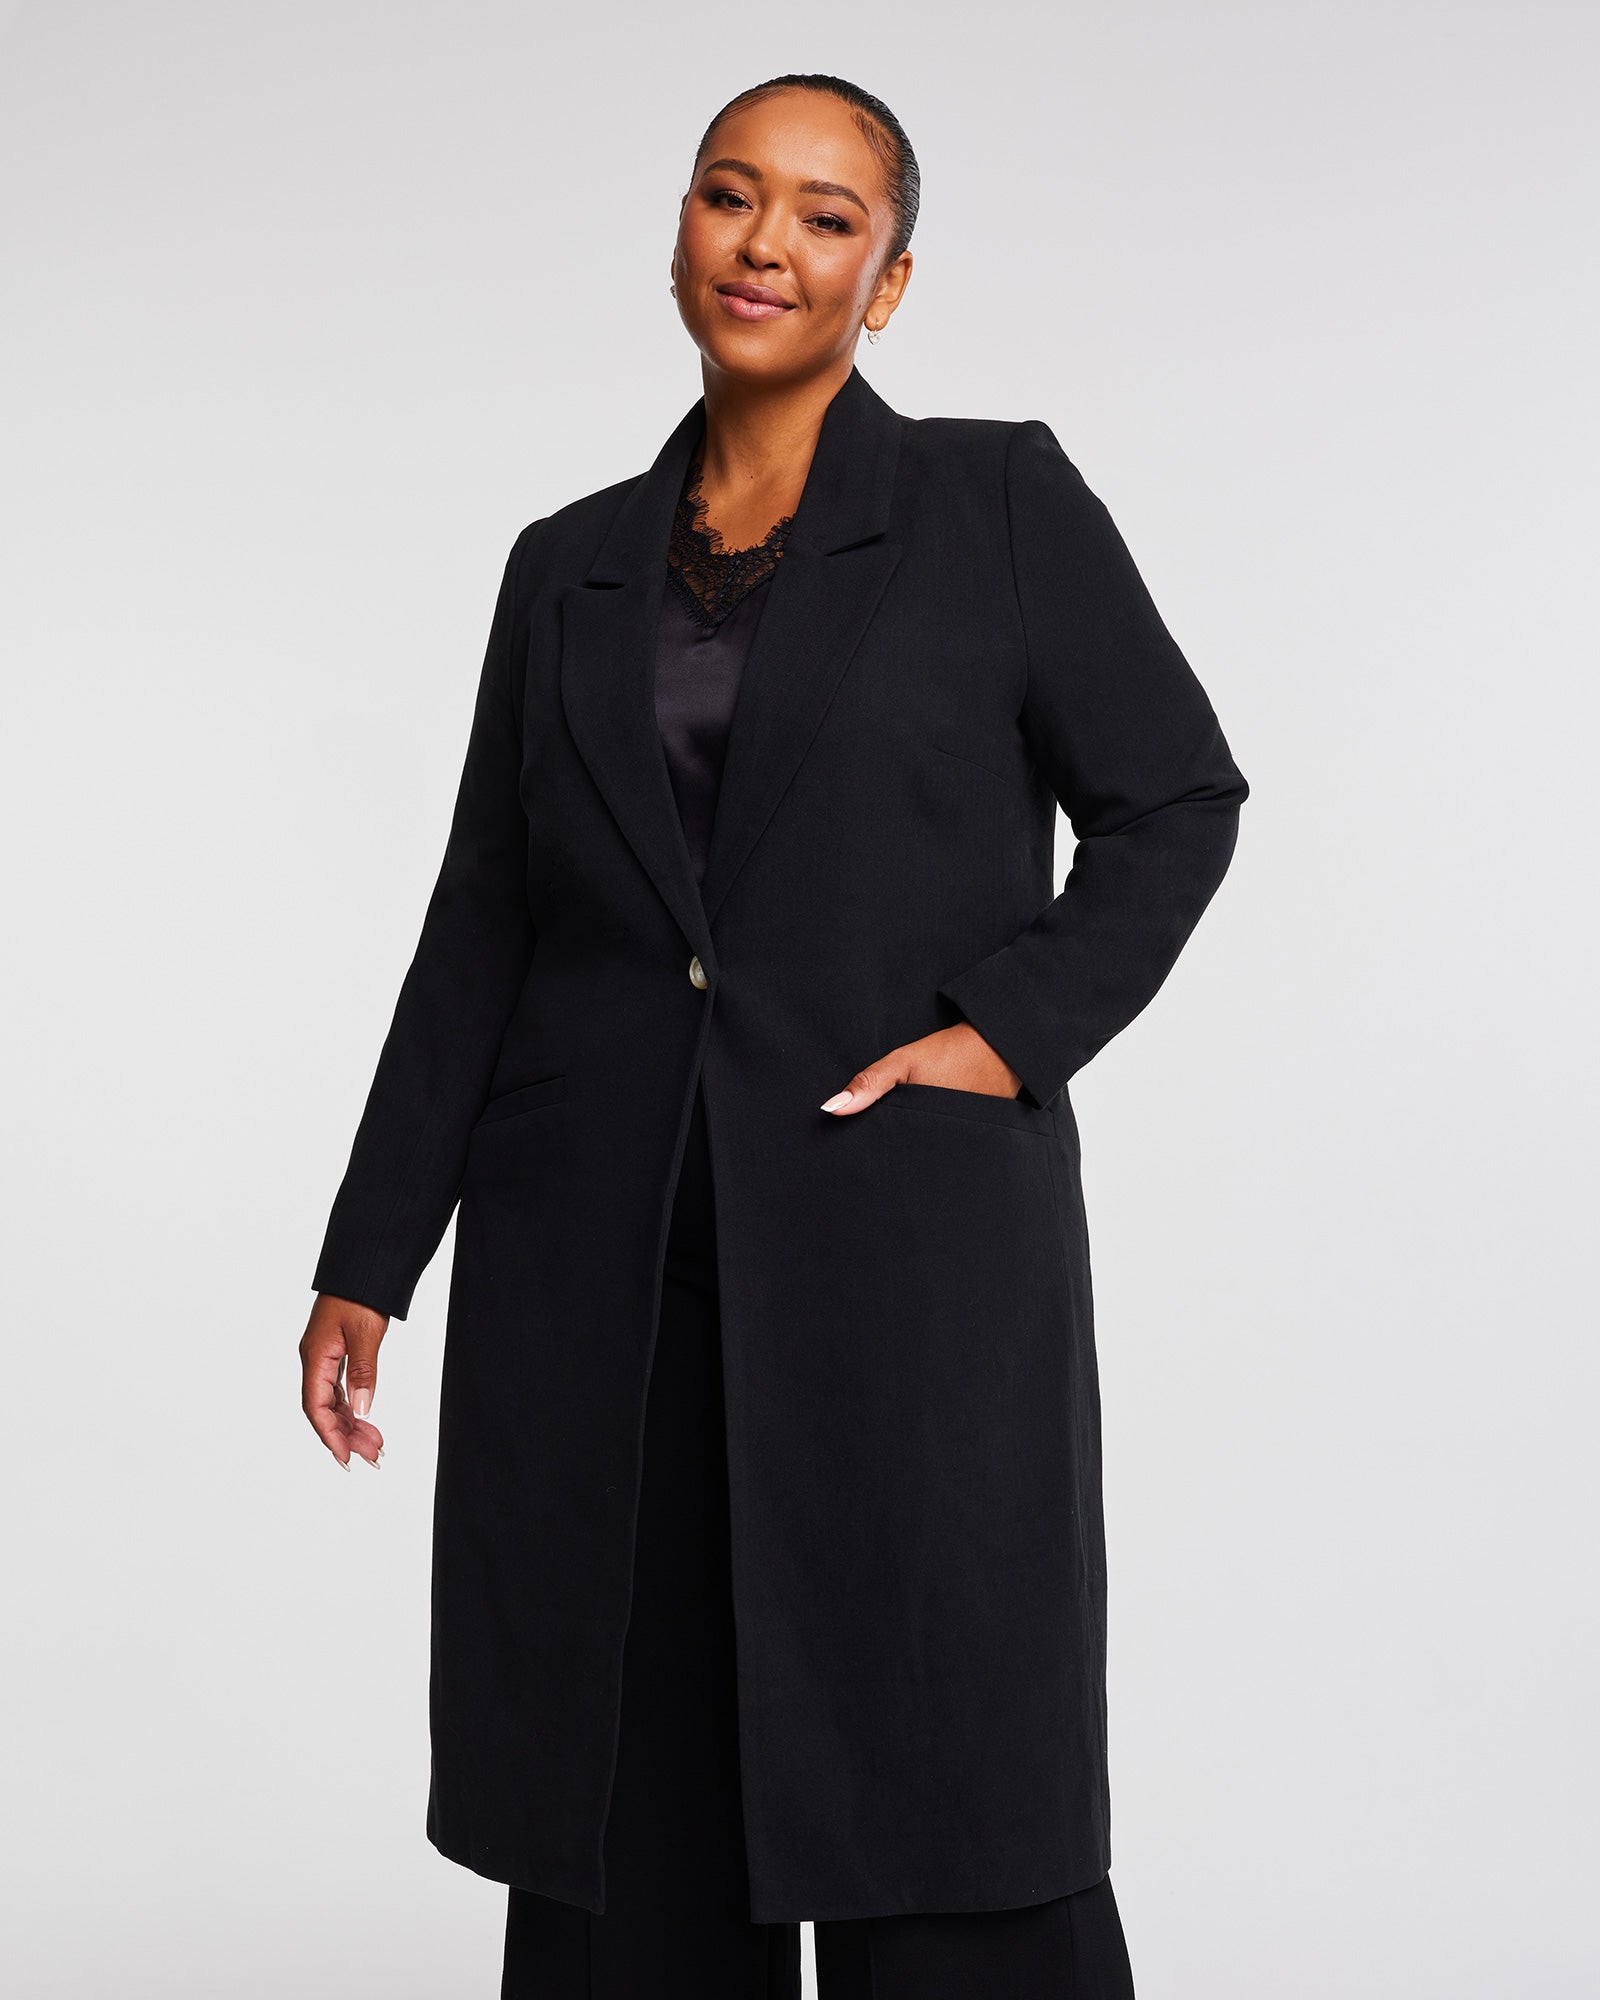 A plus-sized woman wearing a Long Line Black Full-Length Coat.